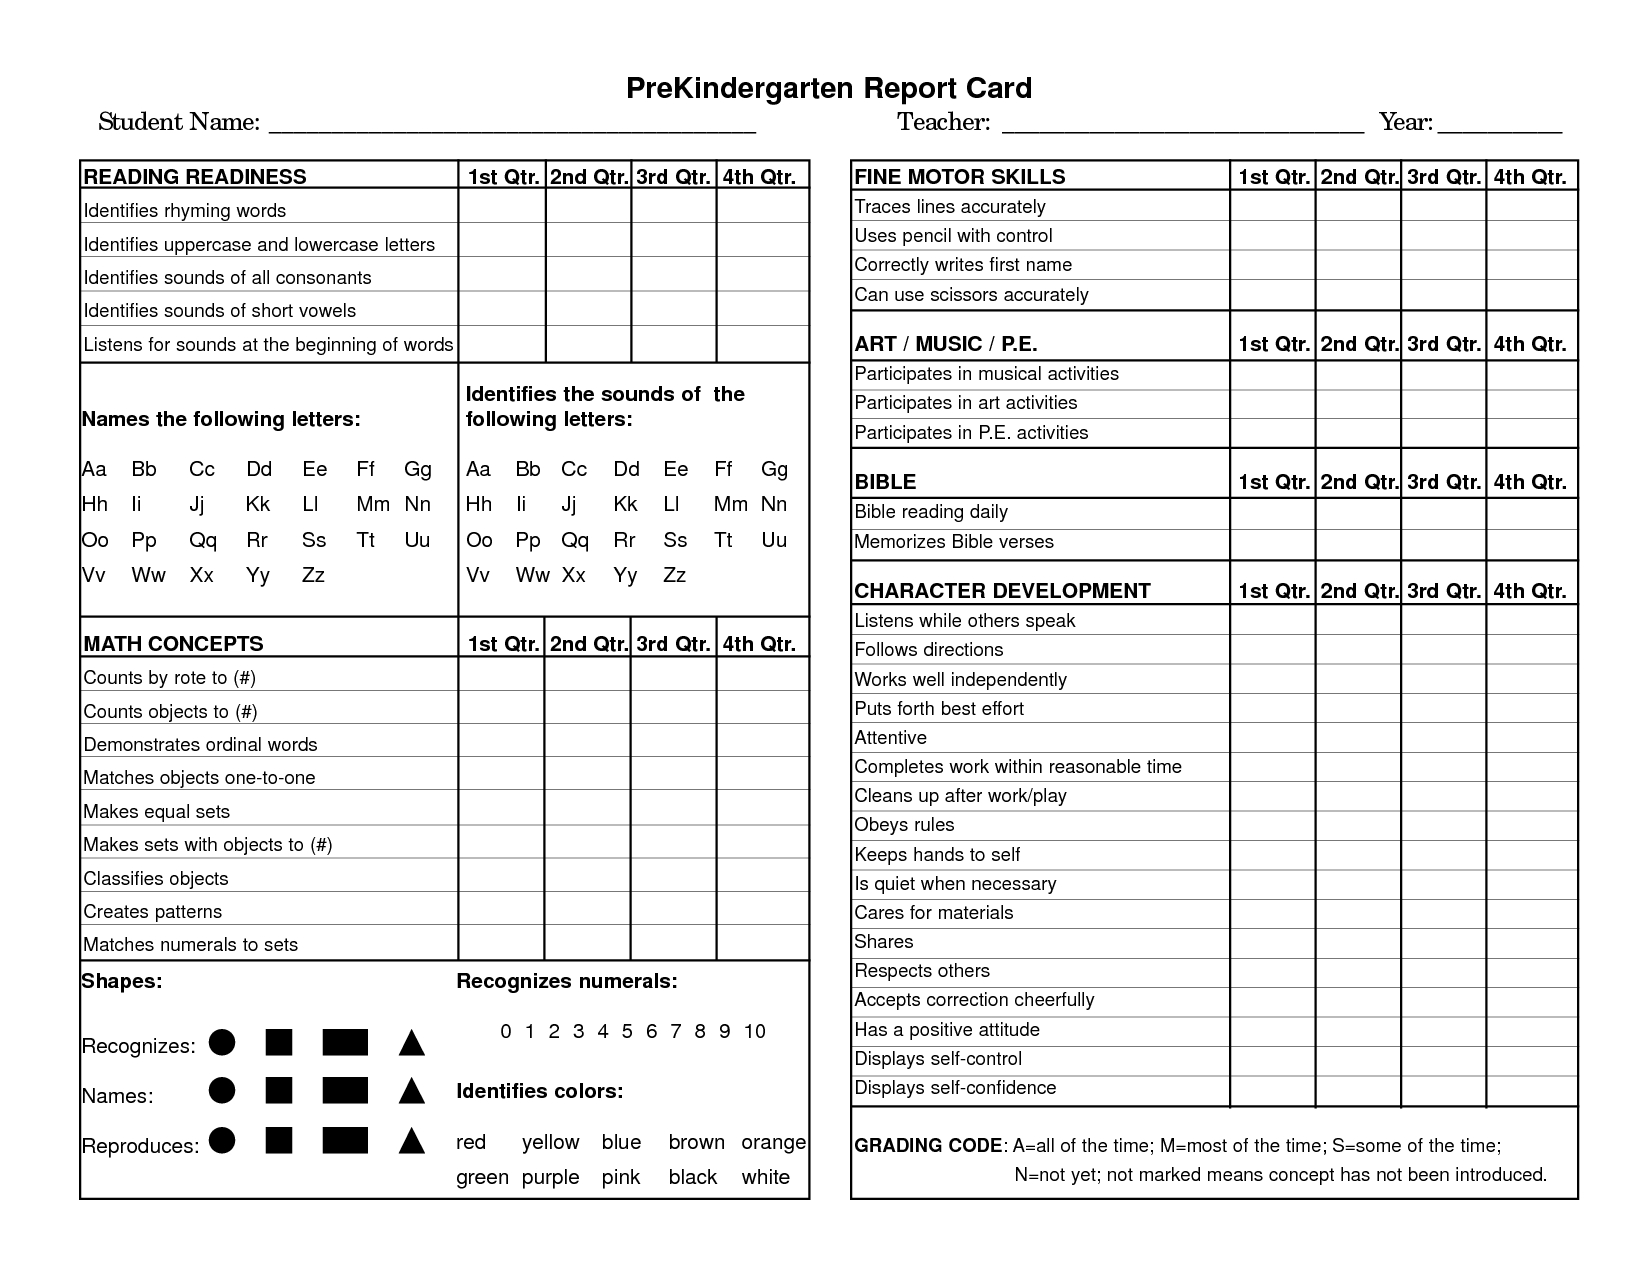 free-printable-preschool-report-cards-free-printable